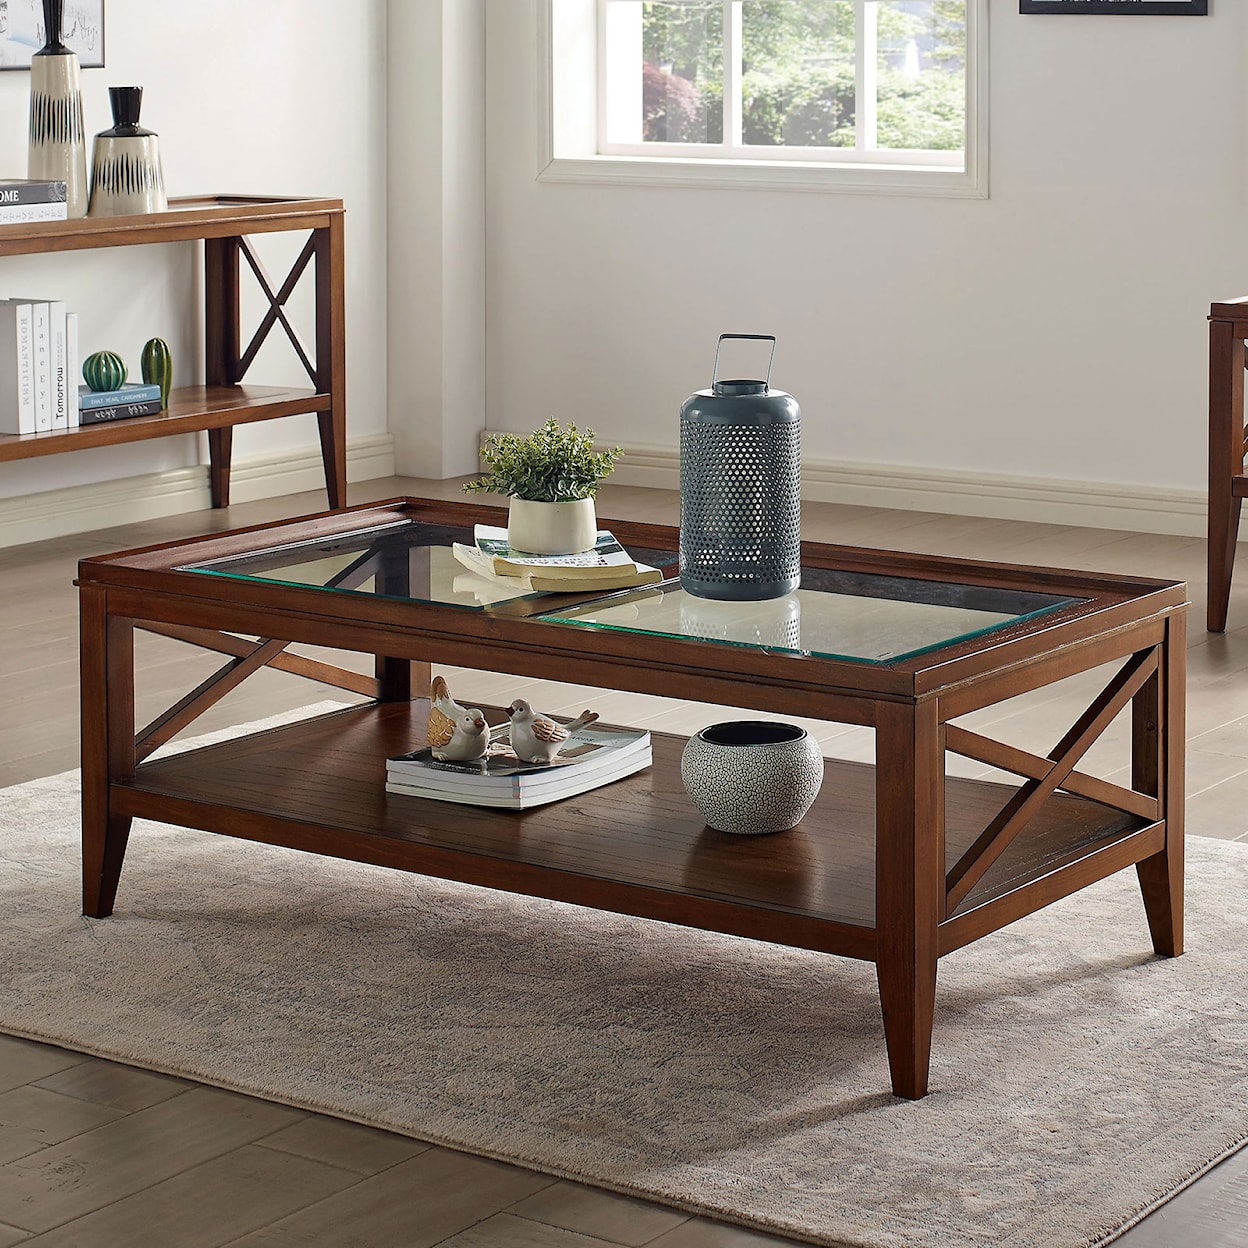 Furniture of America Izar Coffee Table